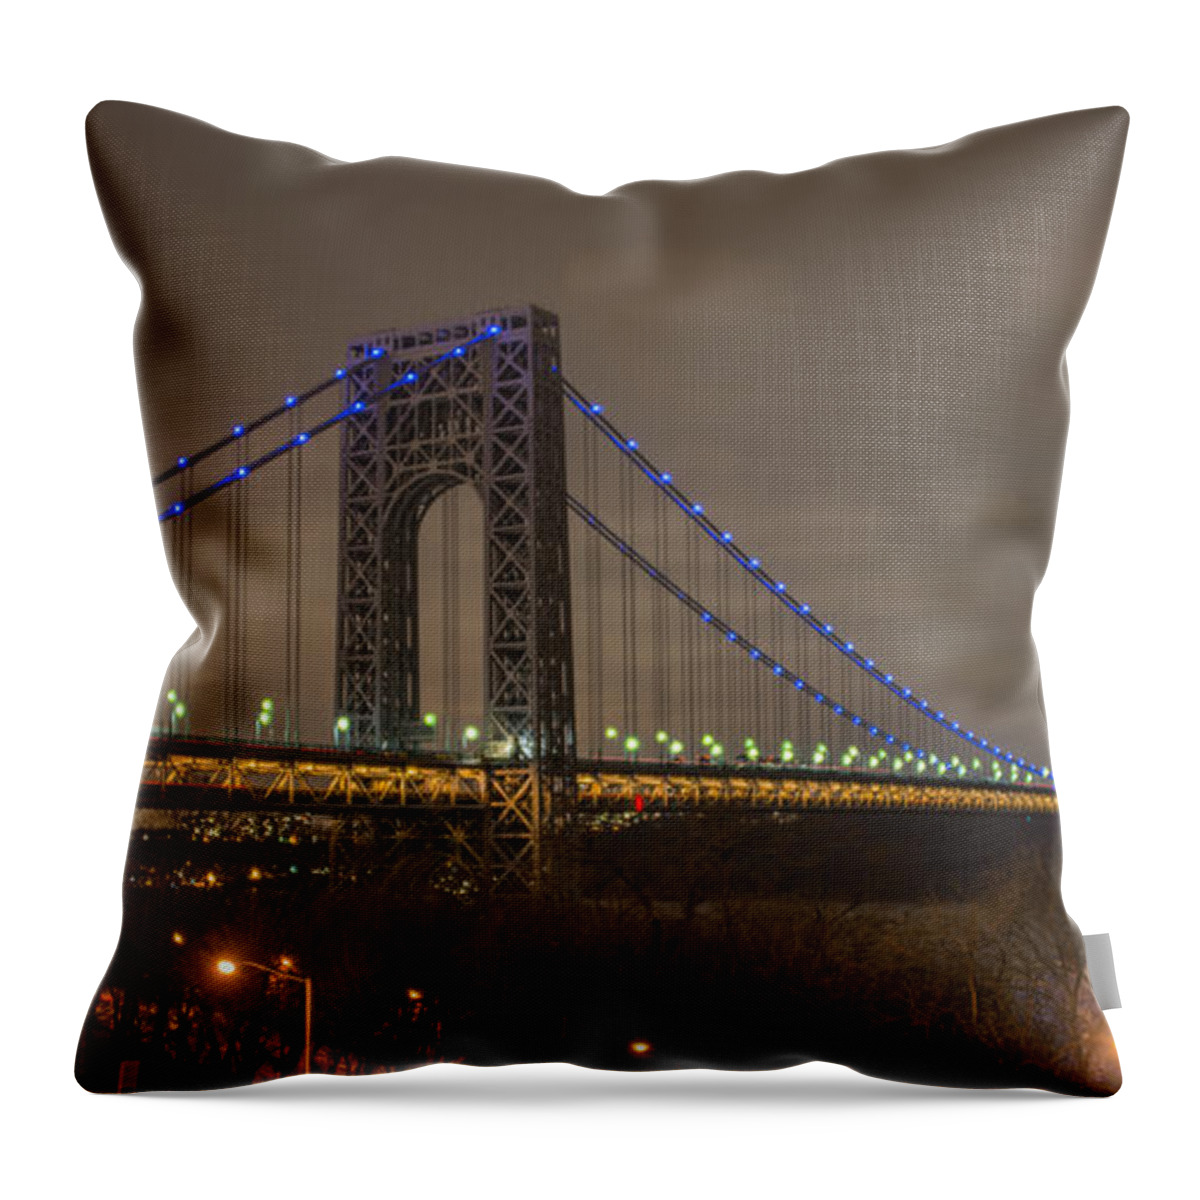 Gwb Throw Pillow featuring the photograph George Washington Bridge #10 by Theodore Jones